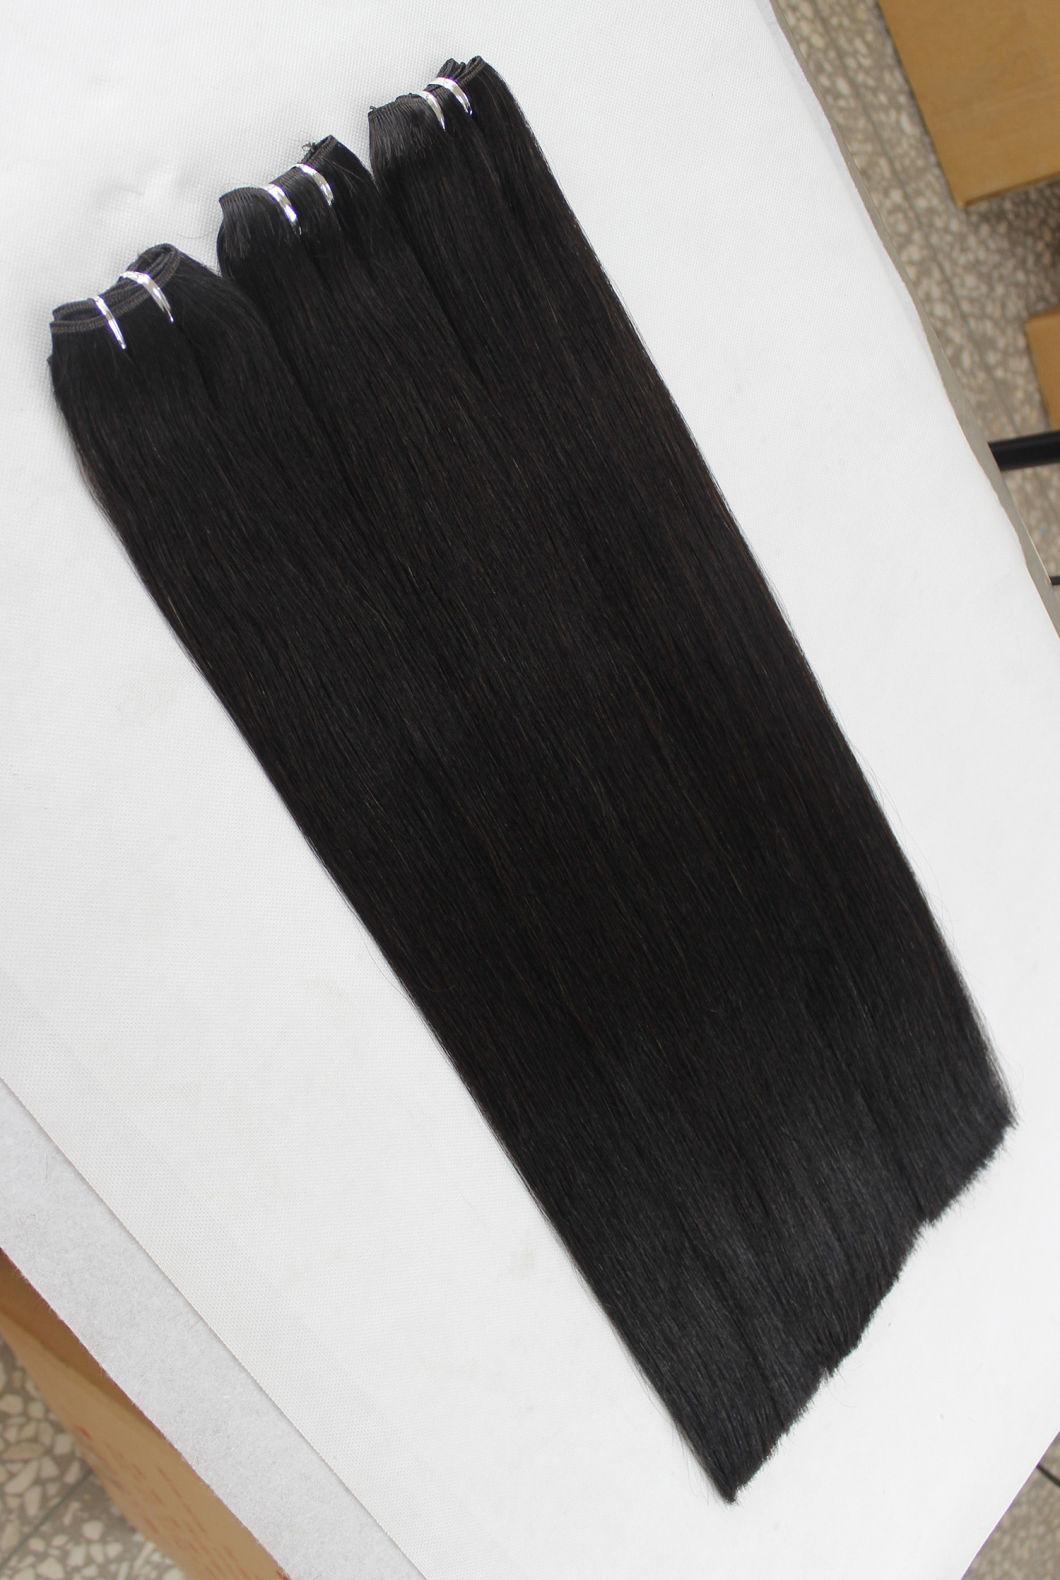 Straight Brazilian Human Hair Hair Bundles Black Color Remy Human Hair Weaving Bundles Extensions